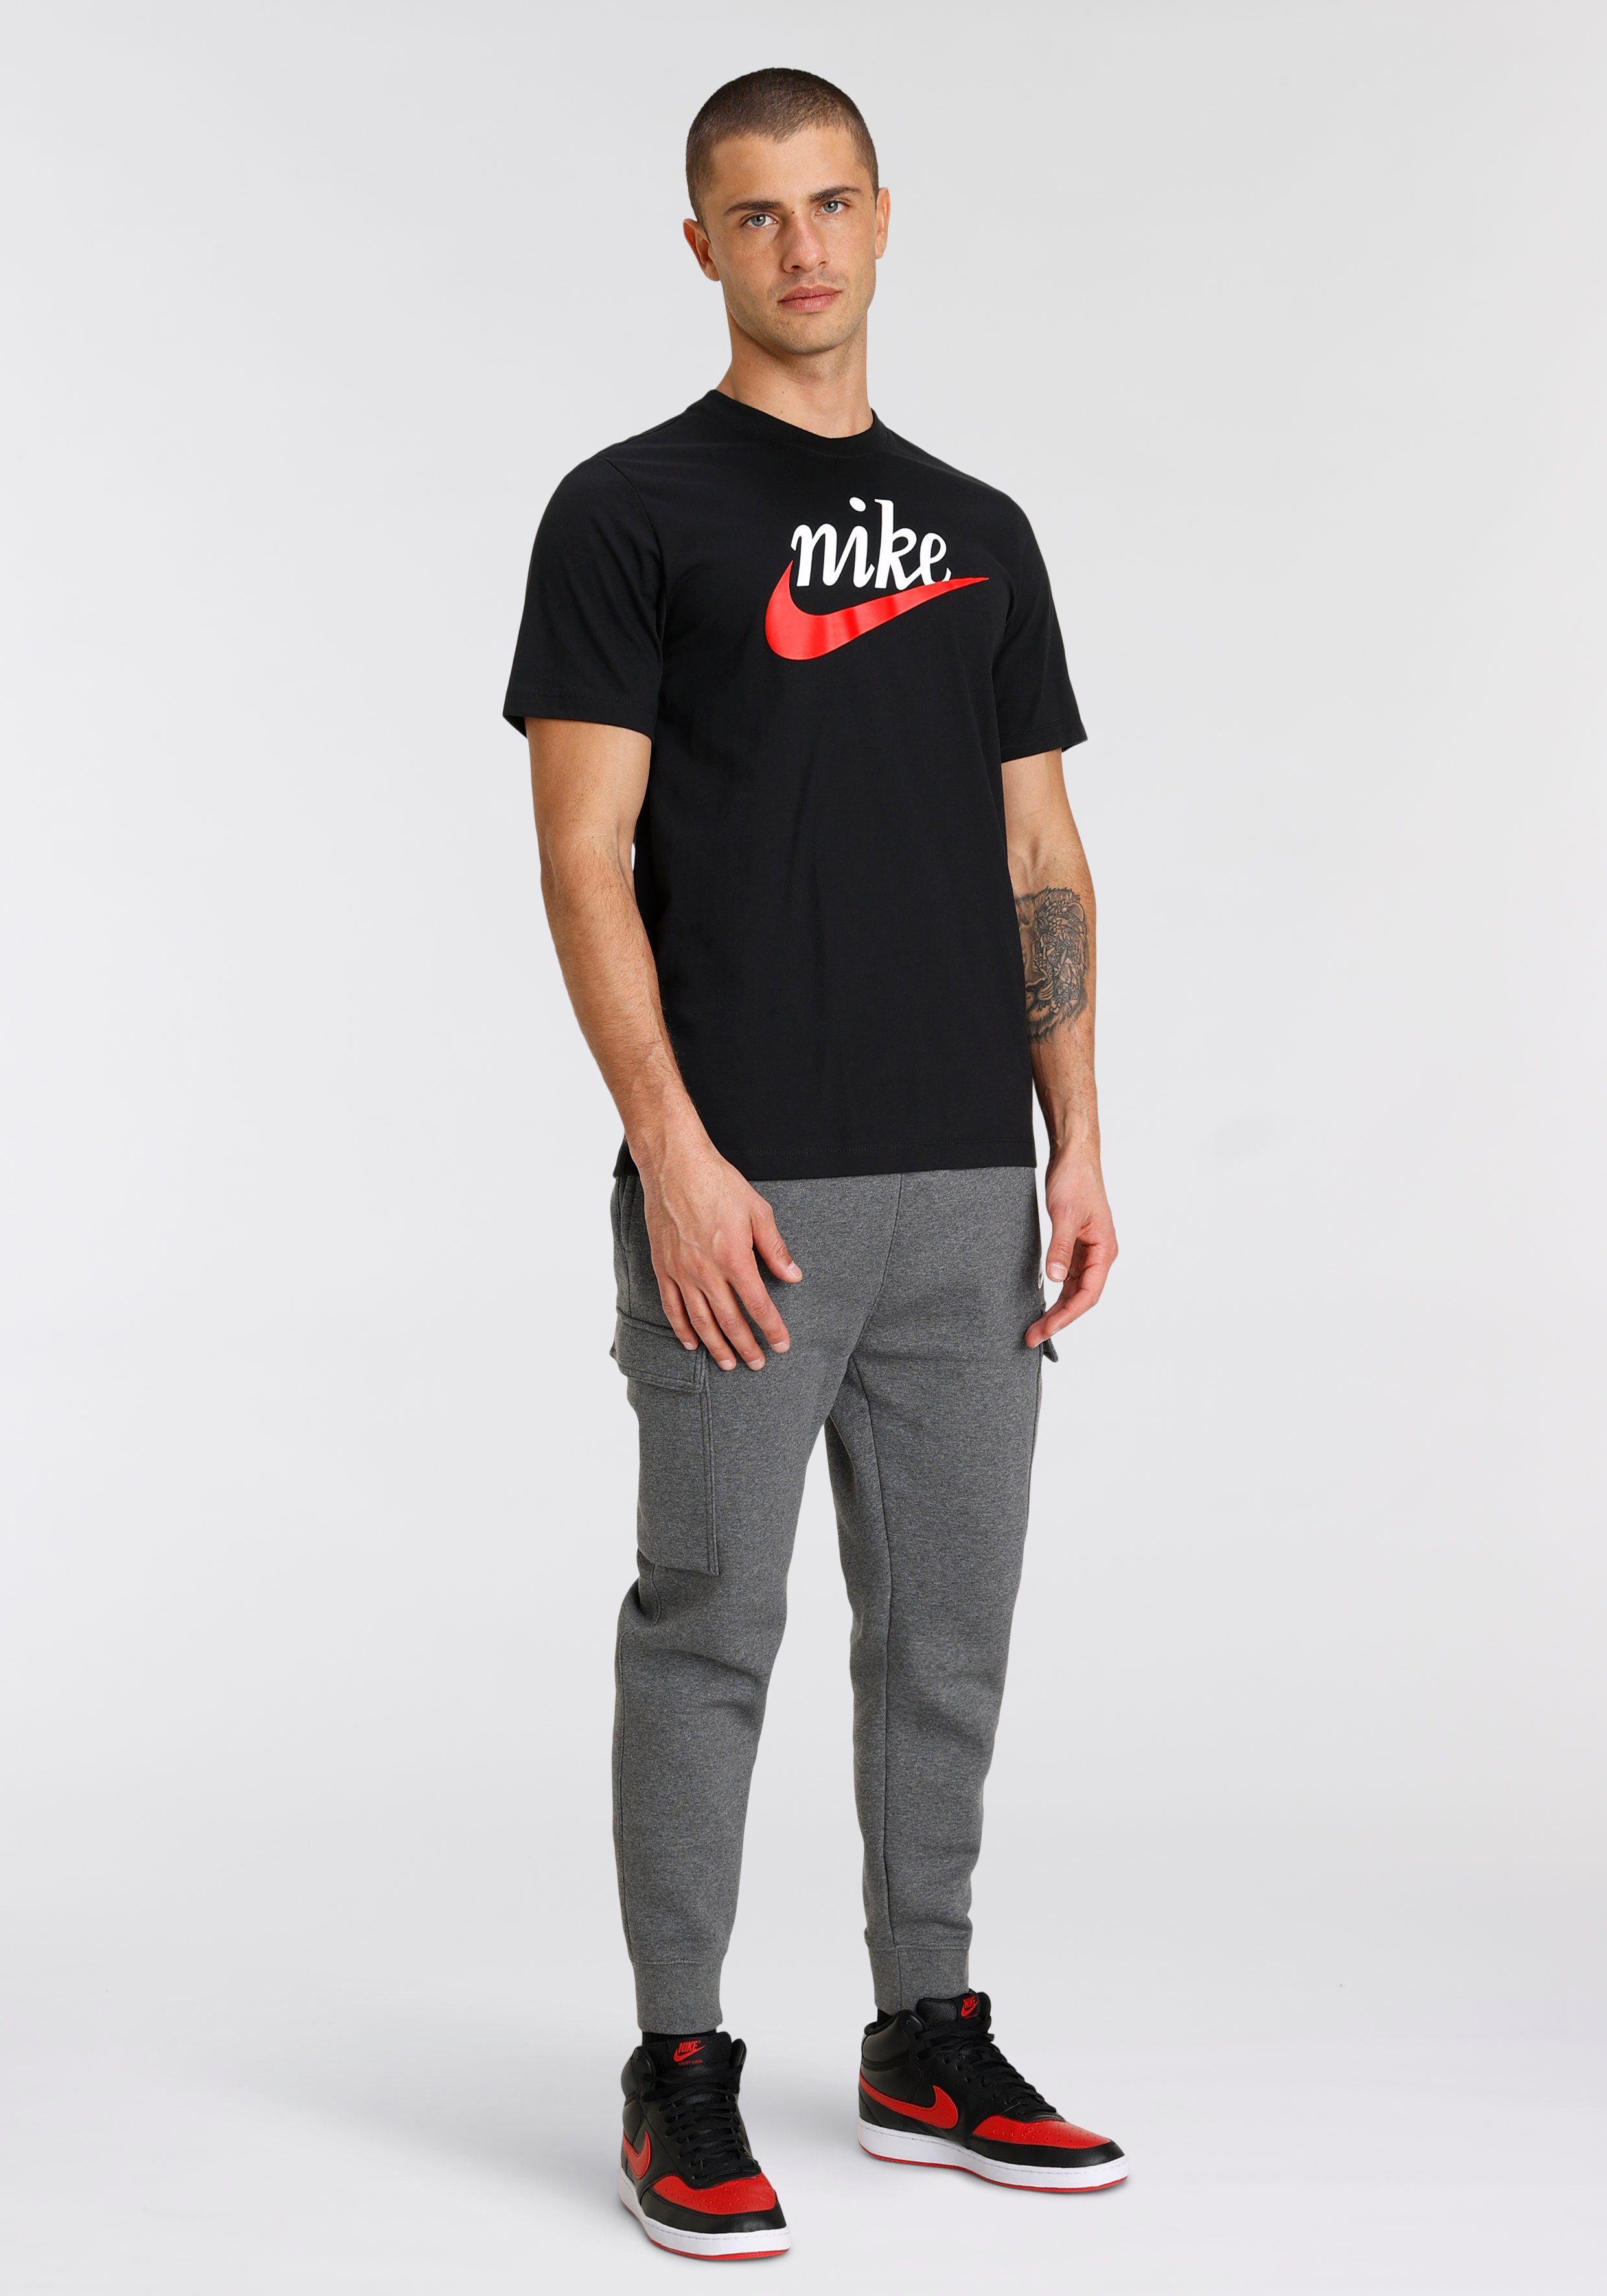 Nike Sportswear T-Shirt Men's T-Shirt BLACK